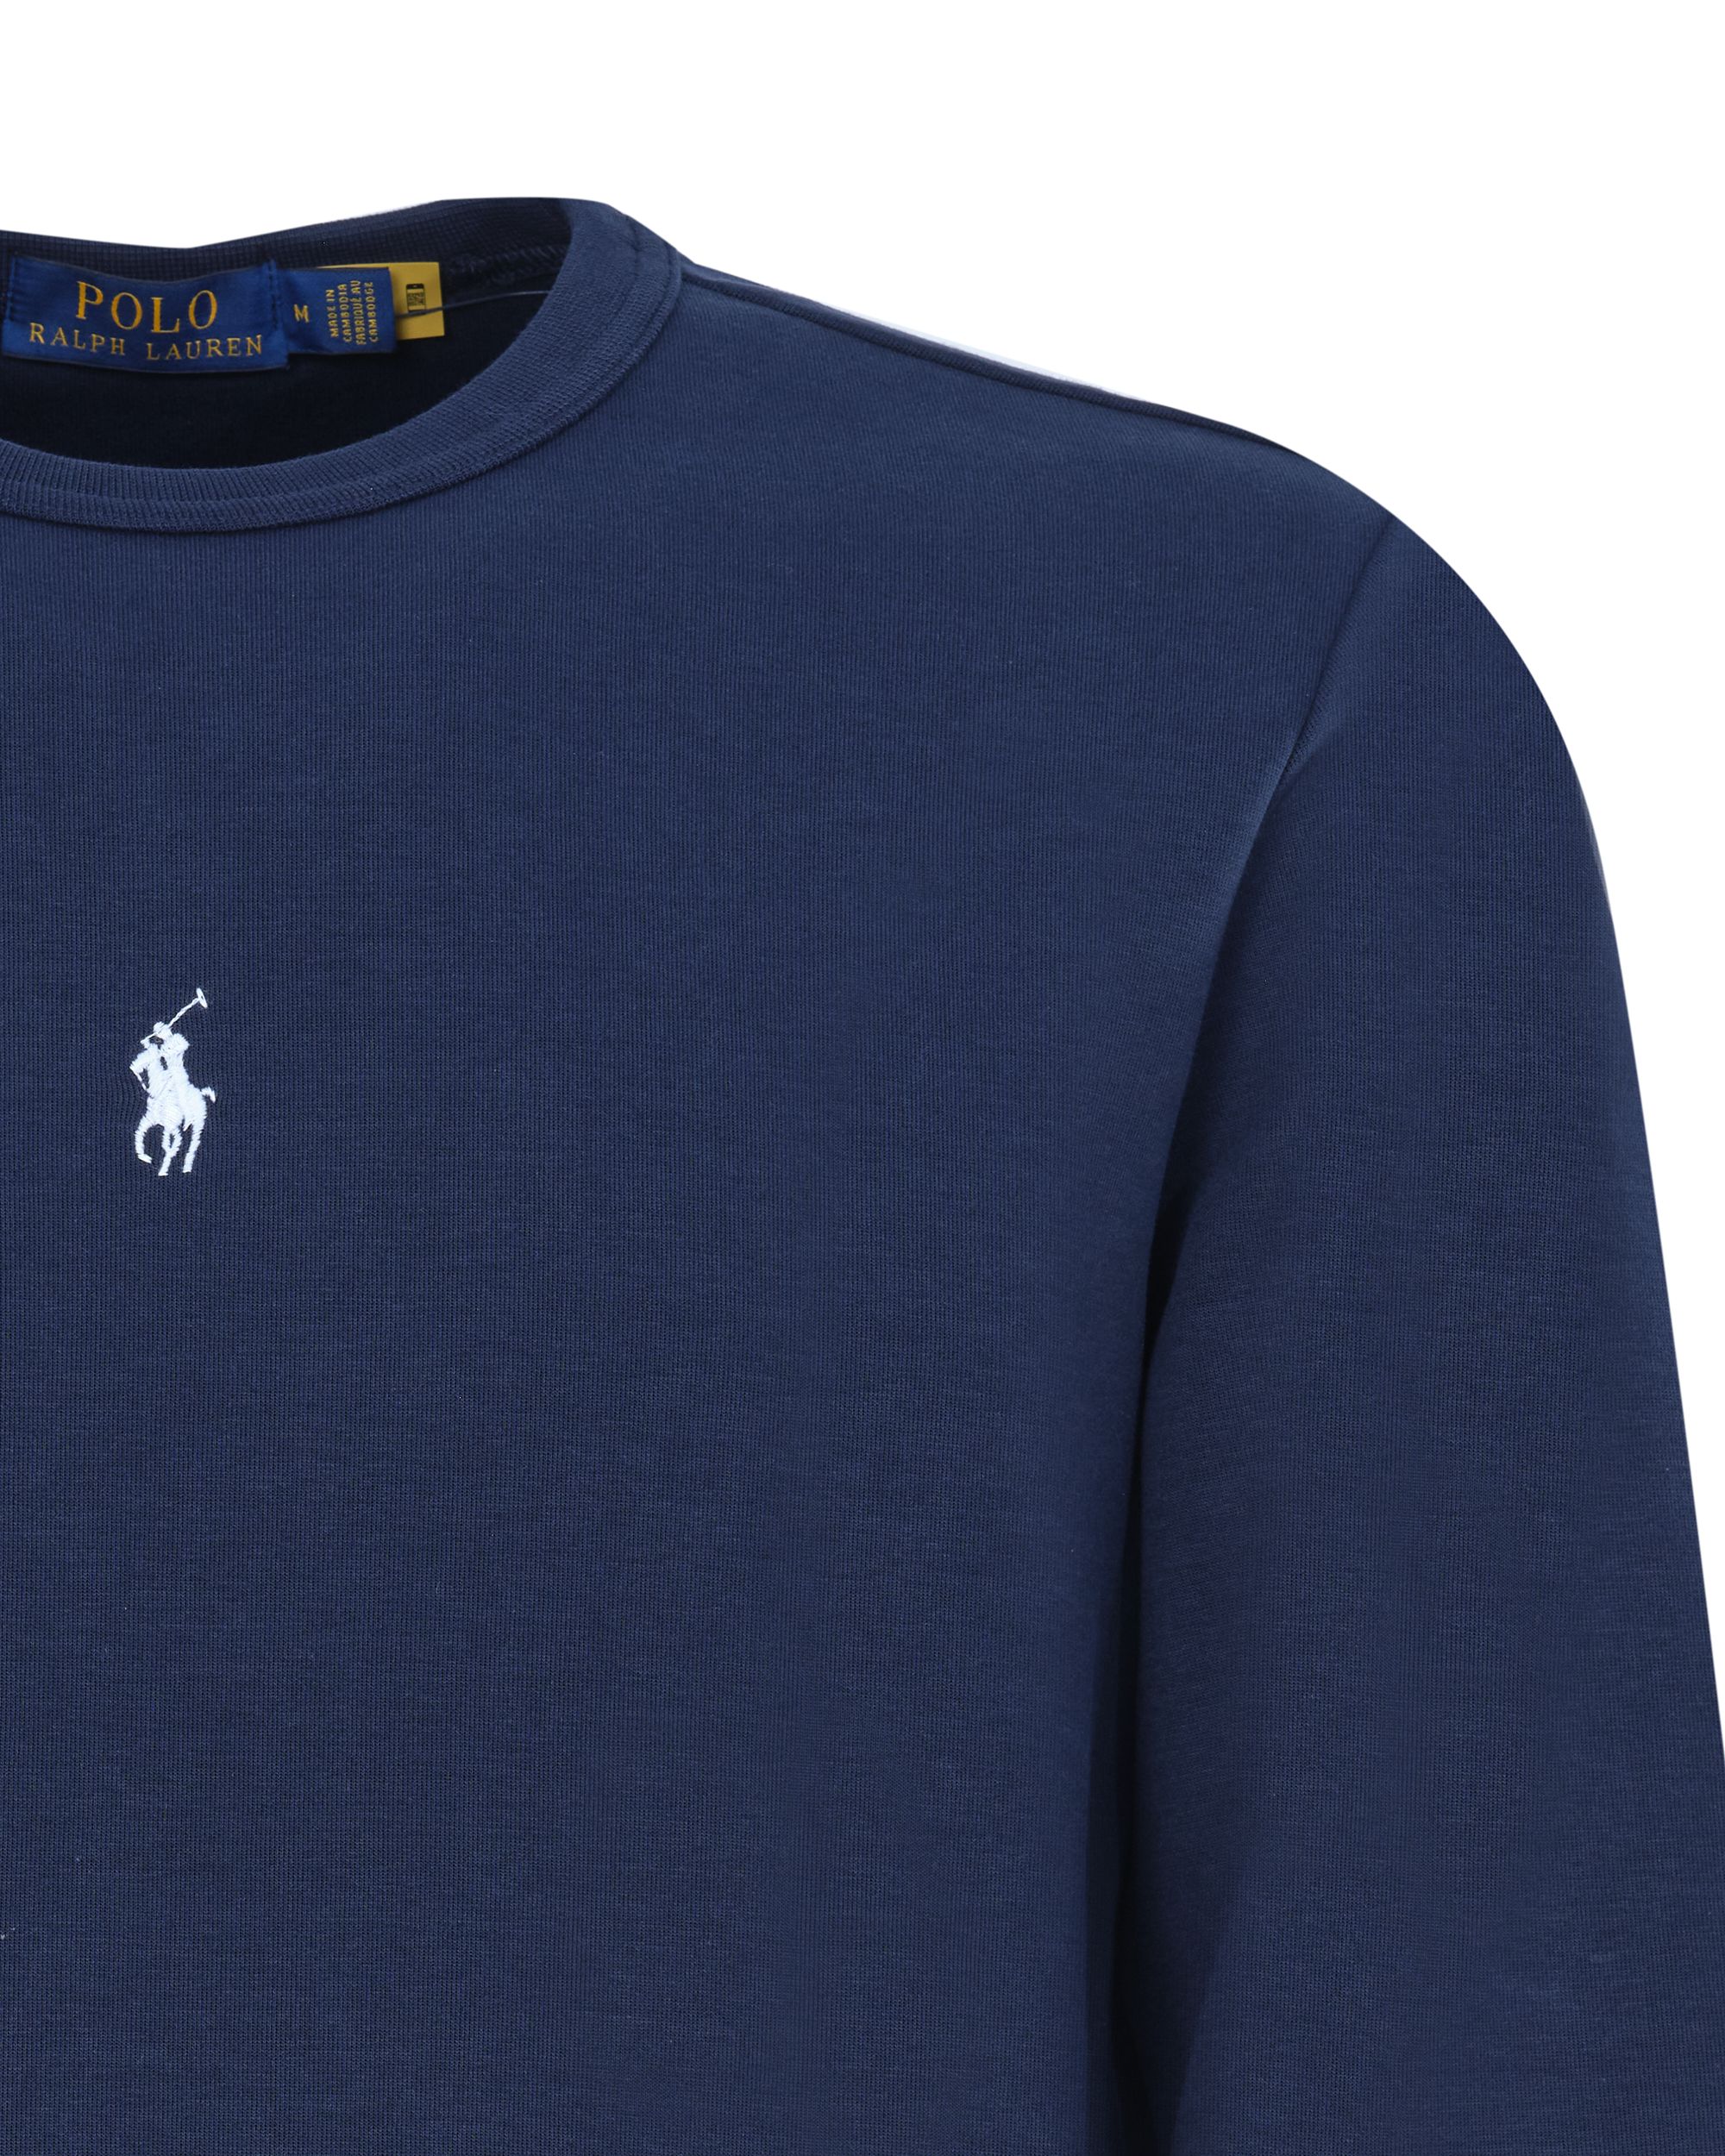 Polo Ralph Lauren - Sweater Donker blauw 080573-001-L